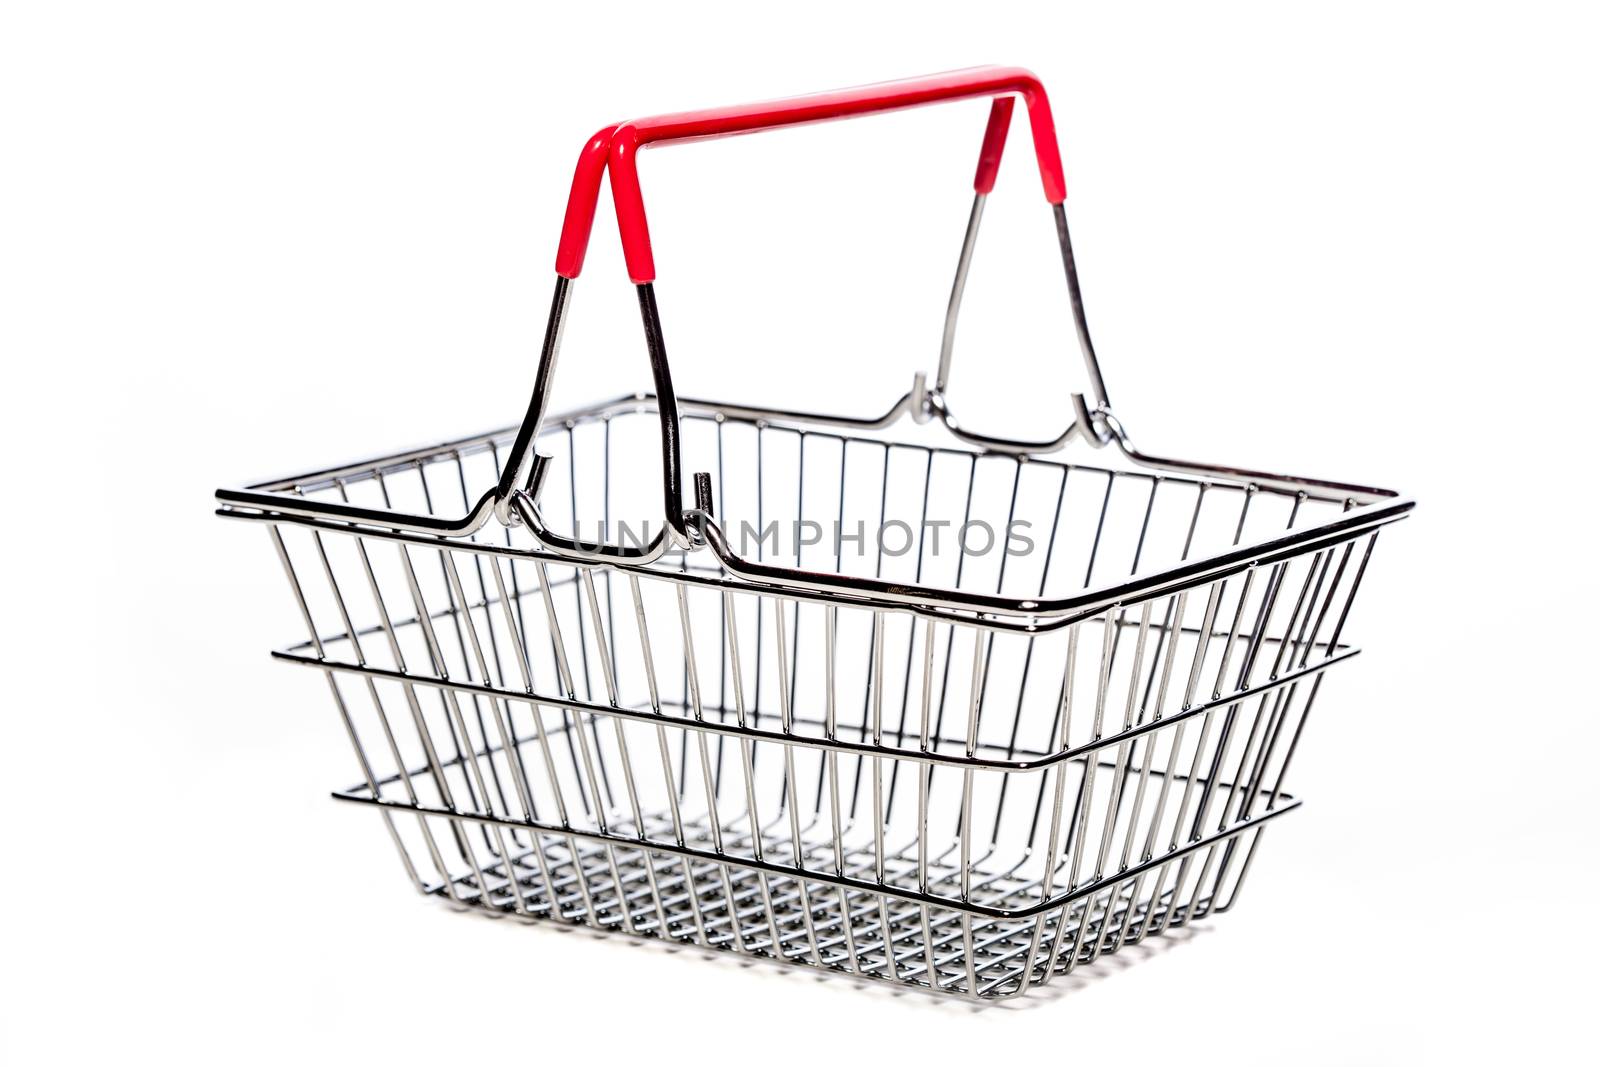 tiny metal shopping basket against white background